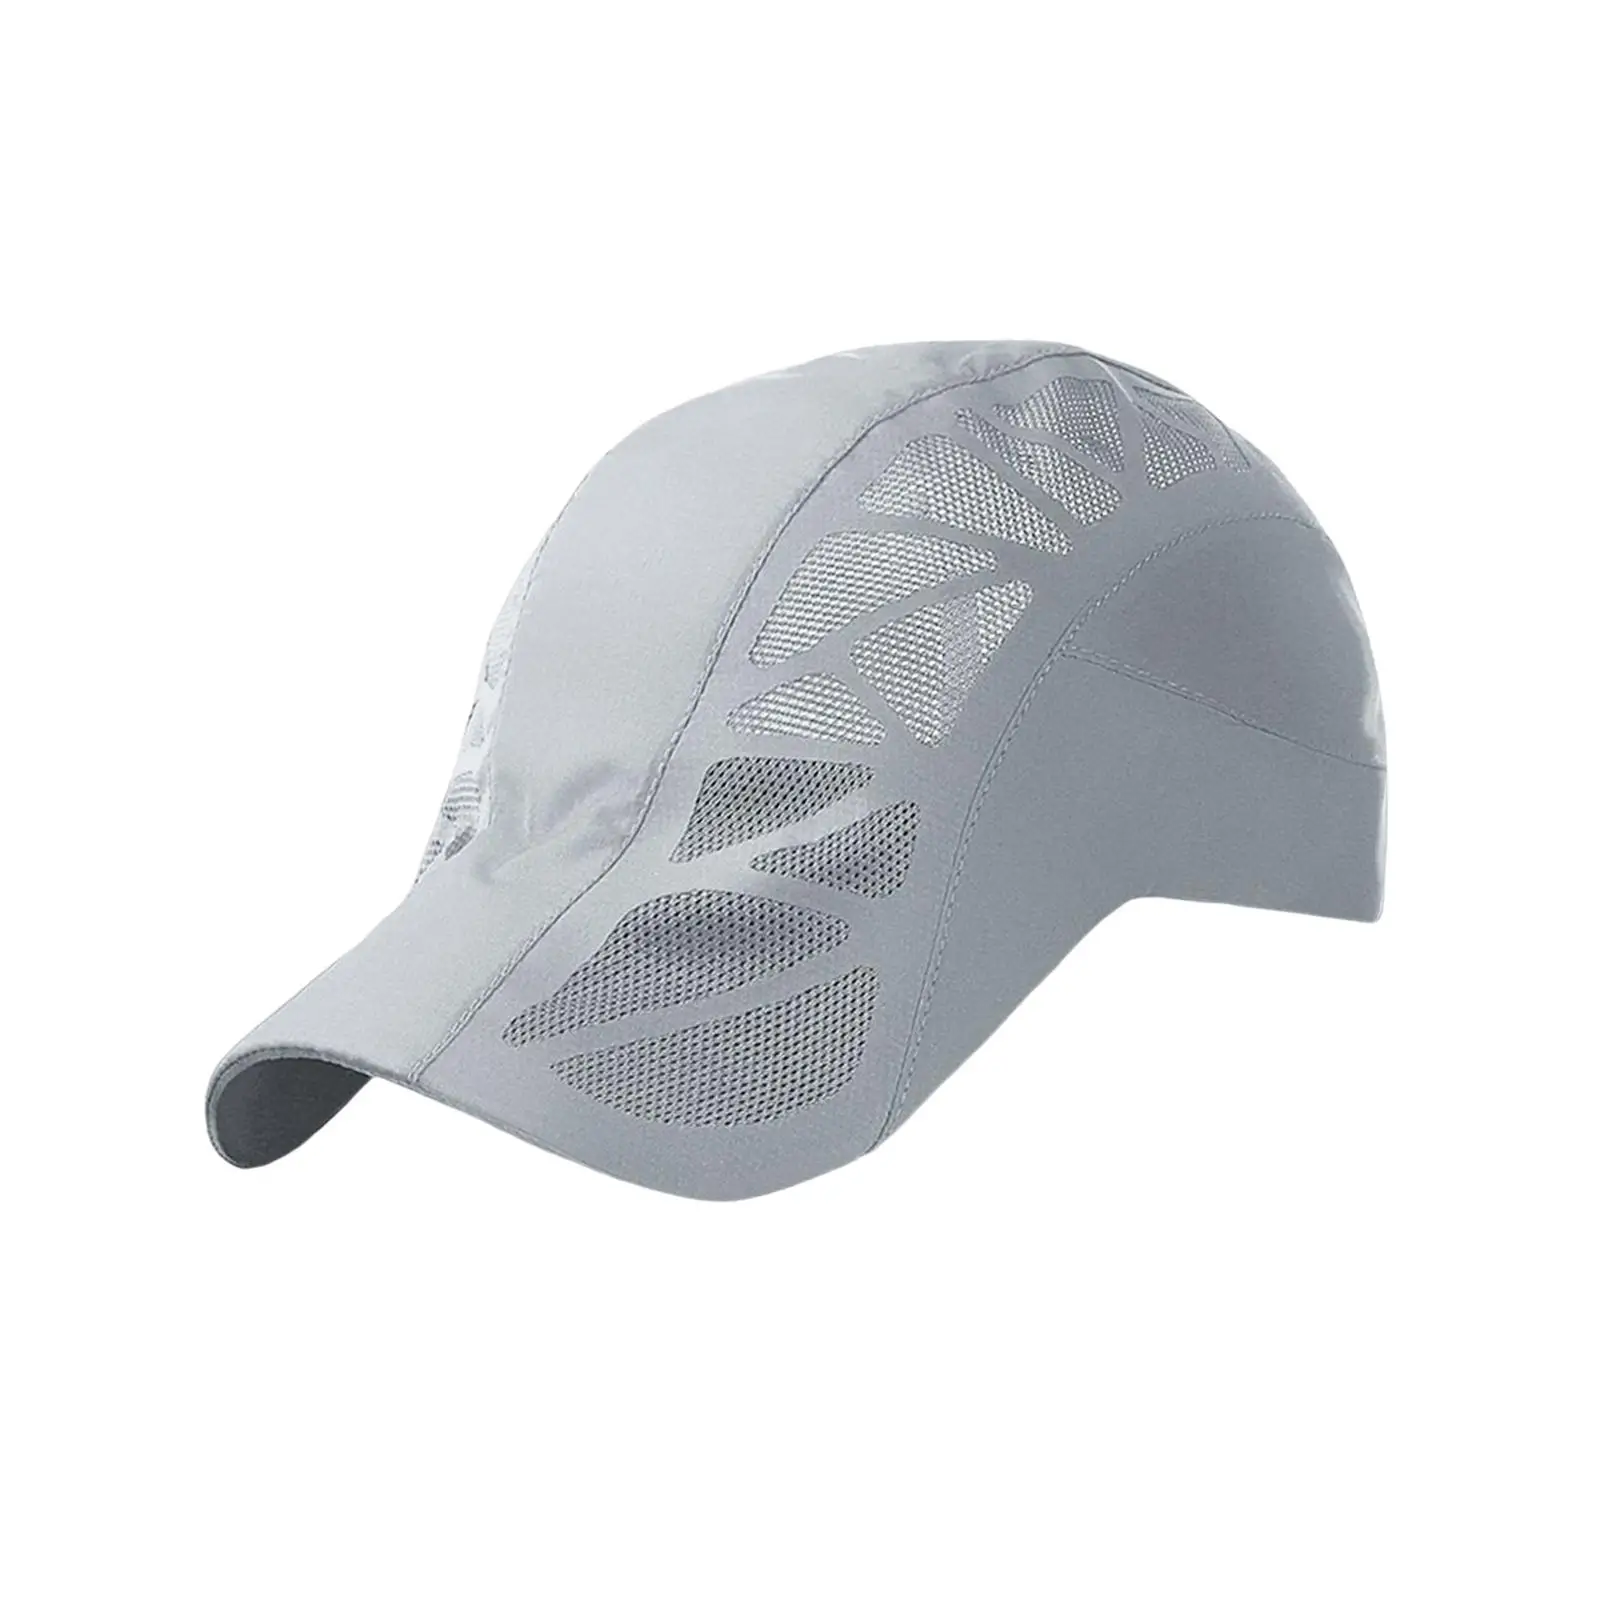 Summer Mesh Baseball Cap Adjustable Protection Flat Cap for Outdoor Sports